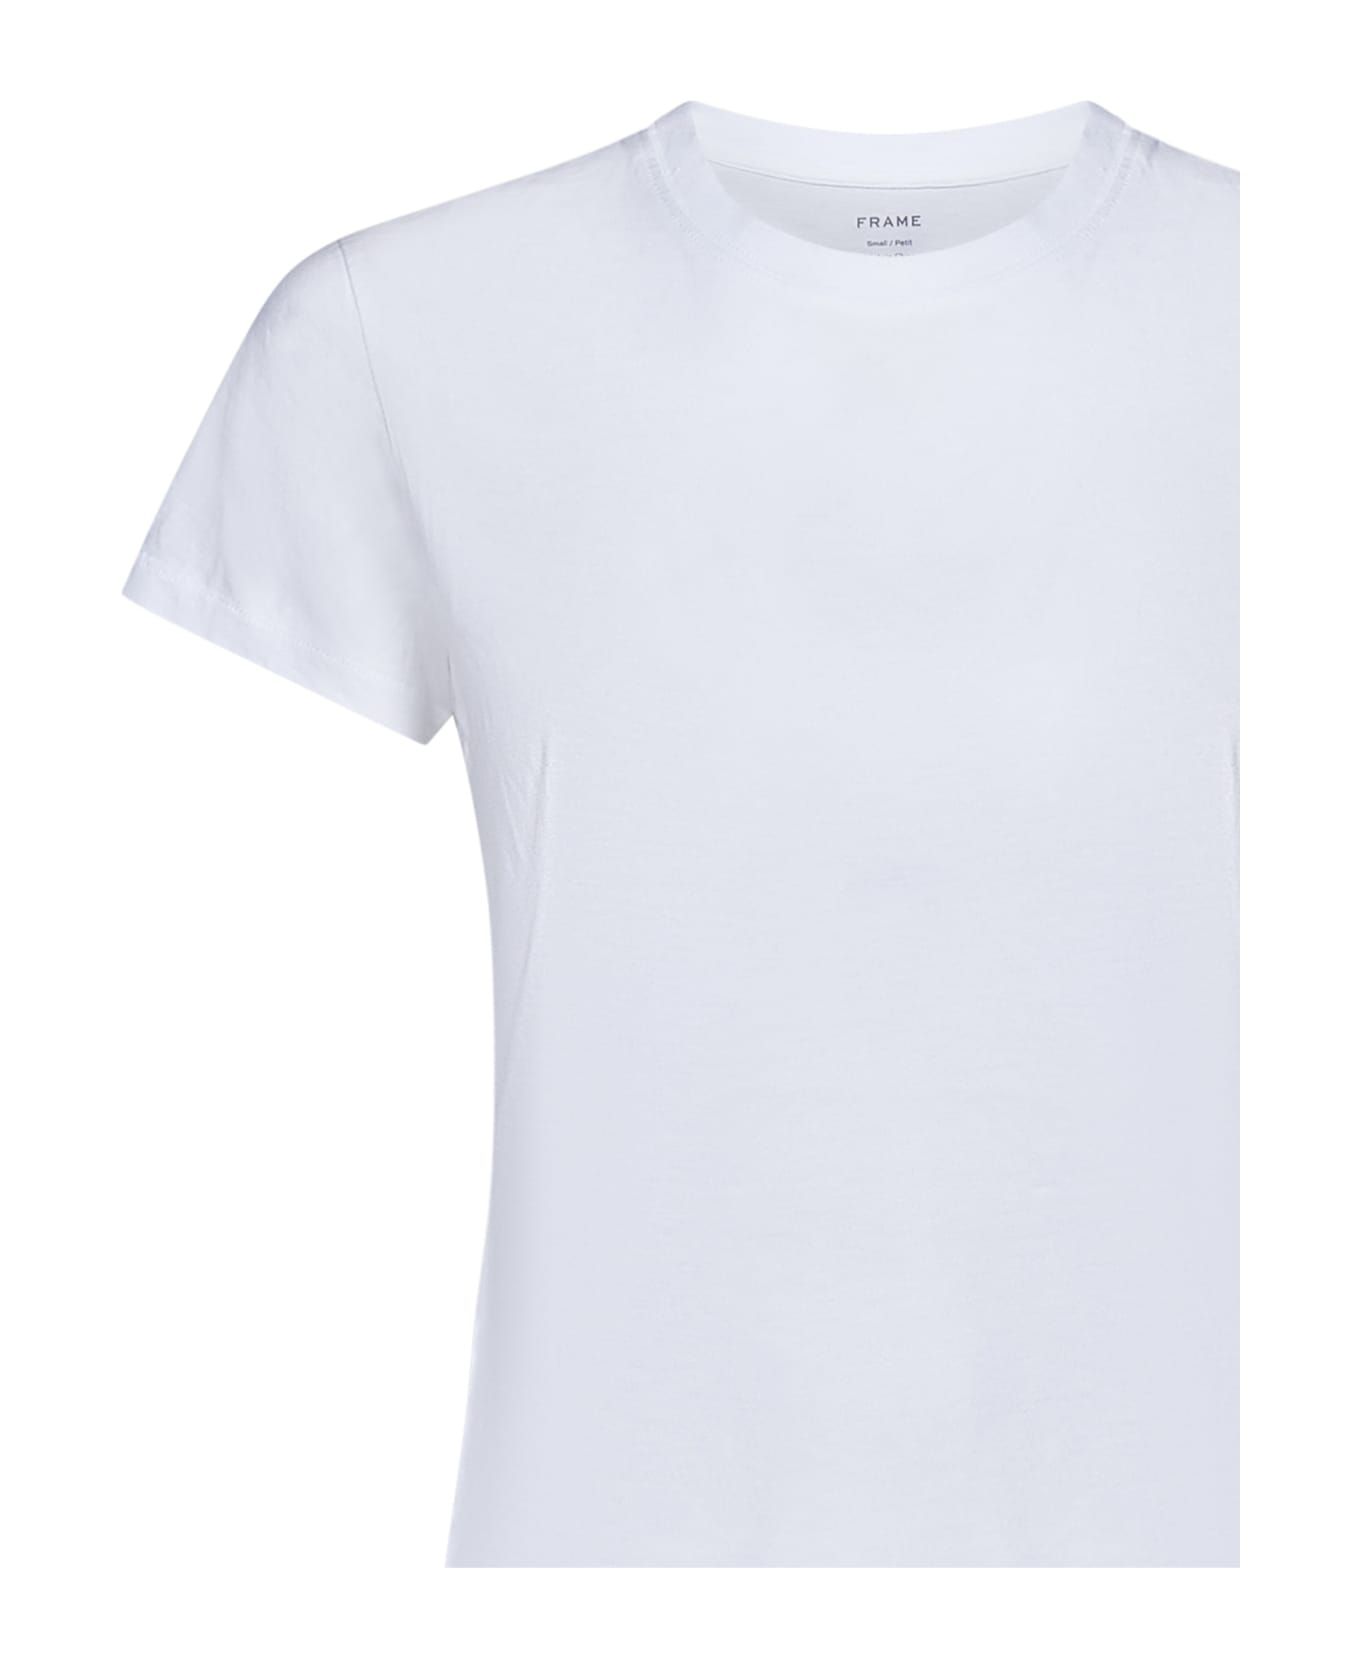 Frame Baby Tee T-shirt - Wht White